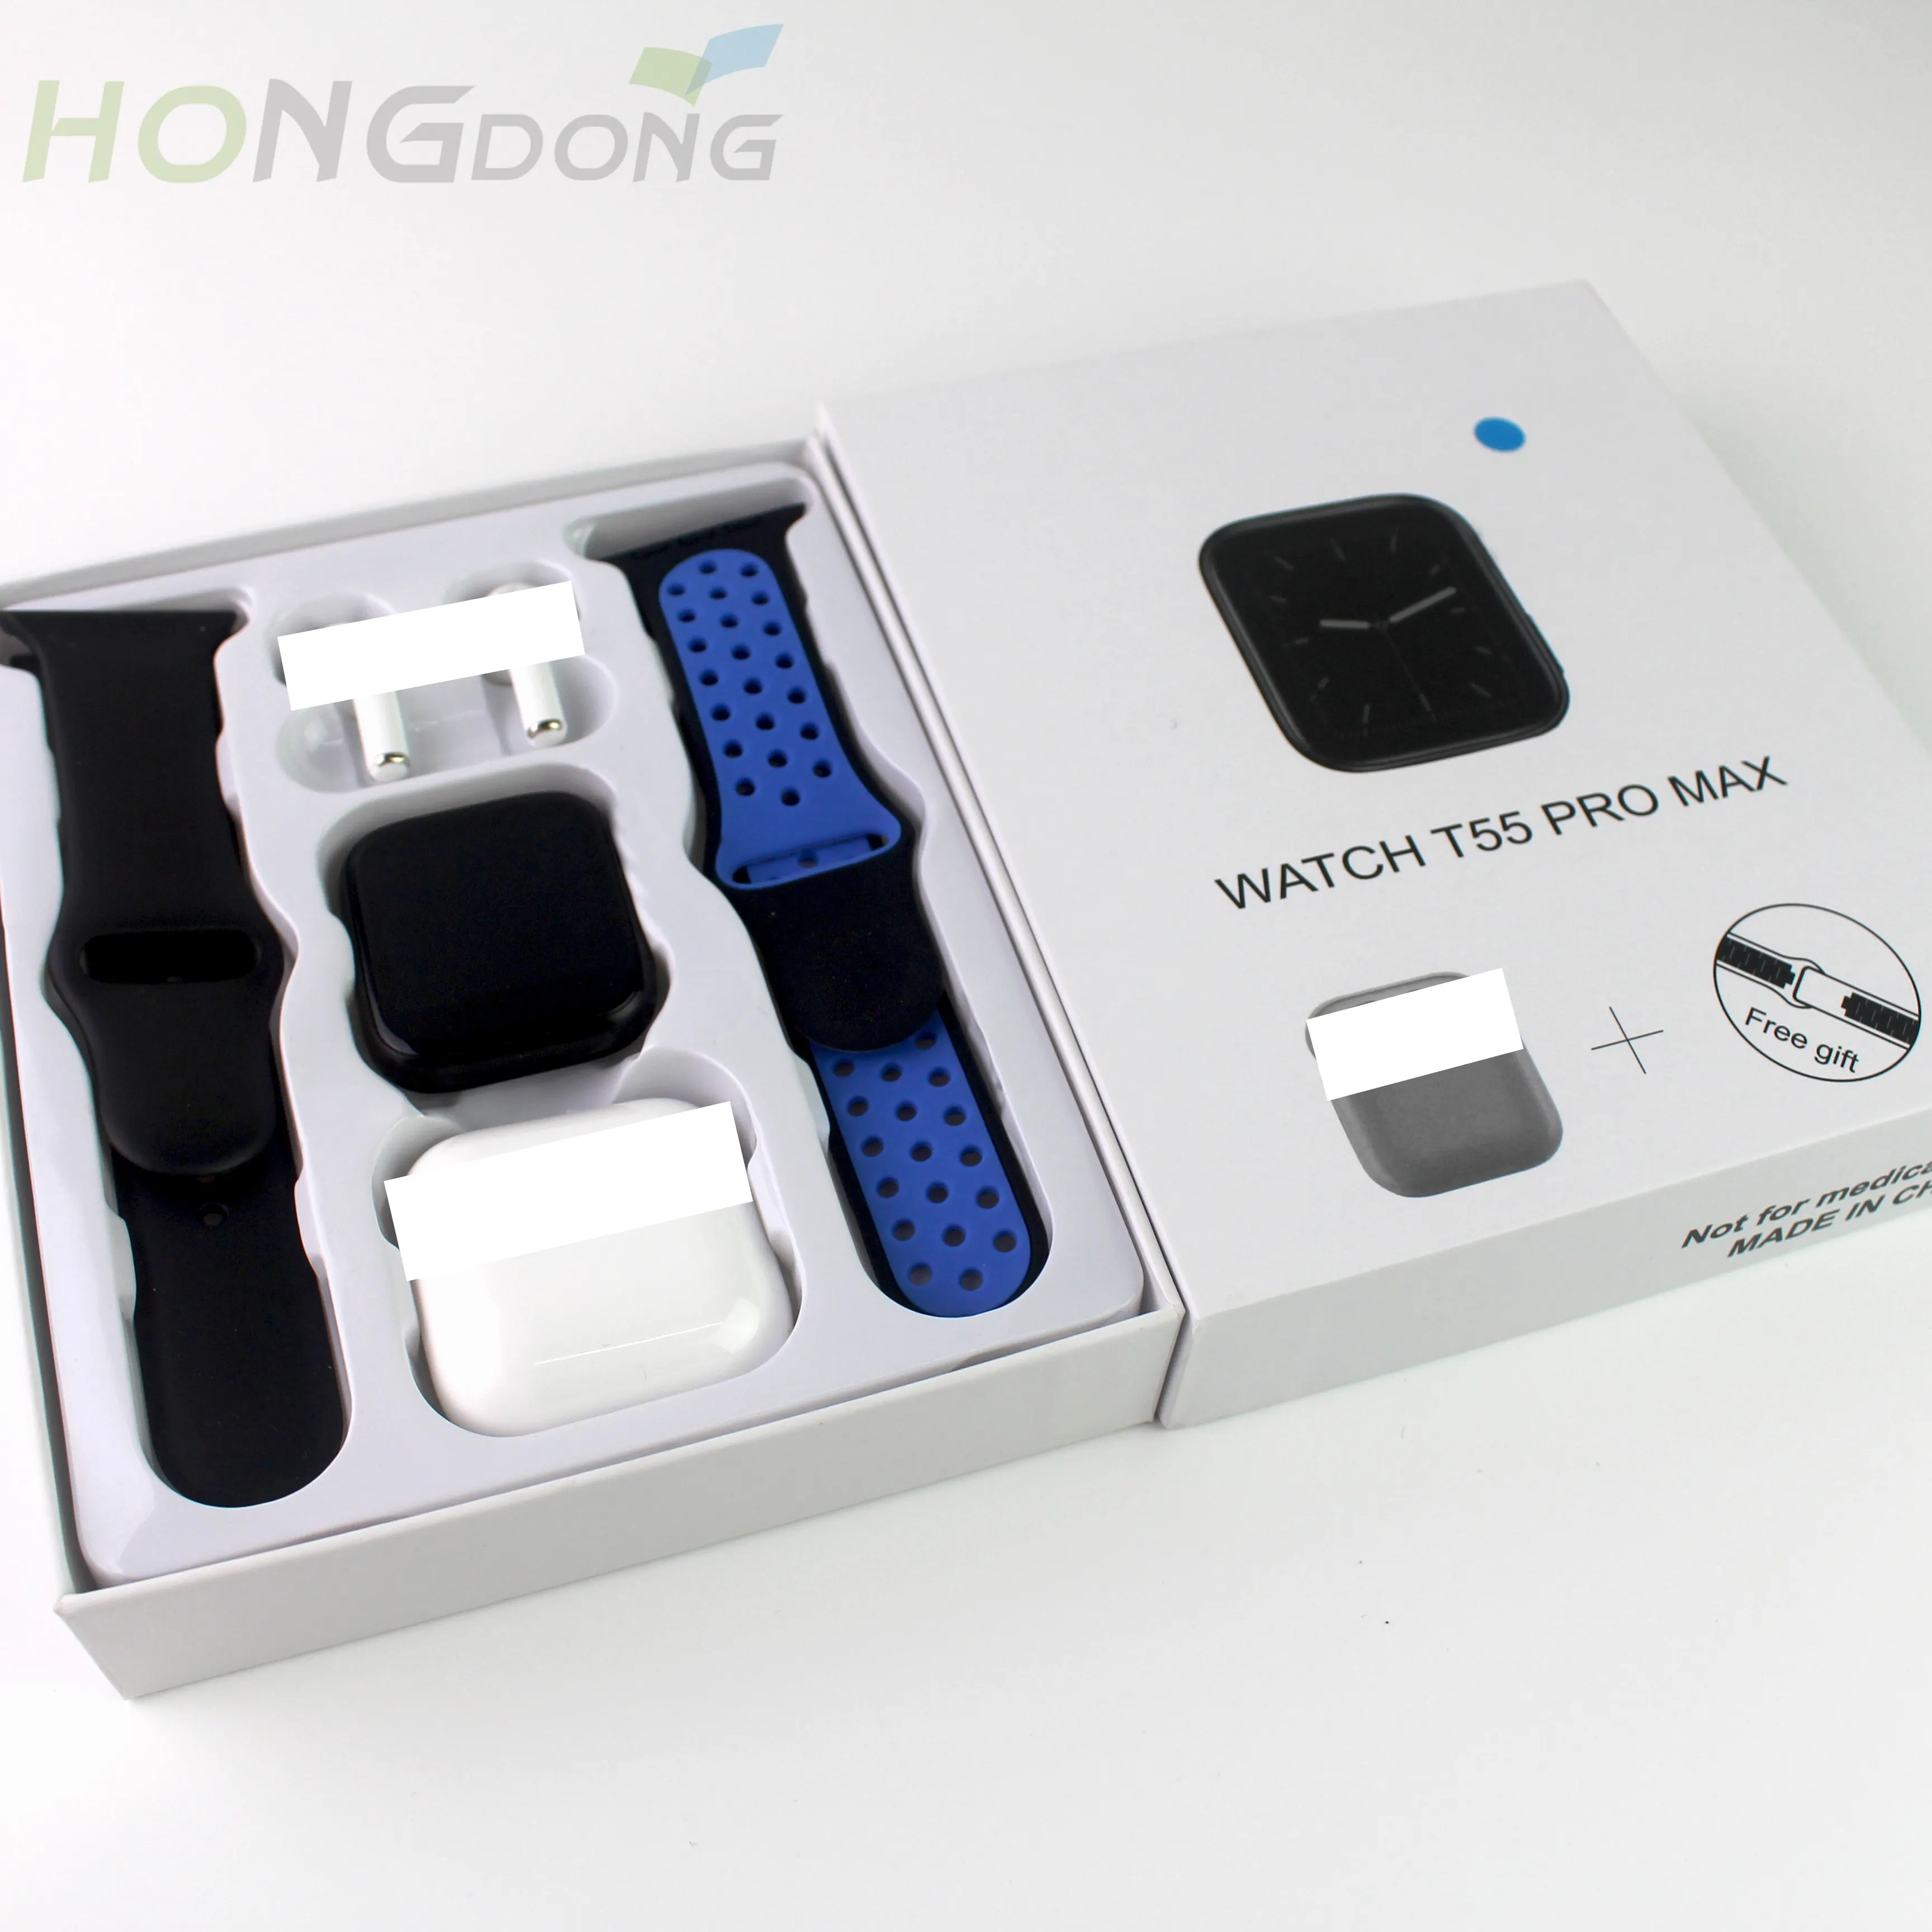 2022 The New Listing T55 PRO MAX Series 7 Smart Watch Reloj Inteligente Waterproof Smartwatch with Headphones Headsets Earbuds